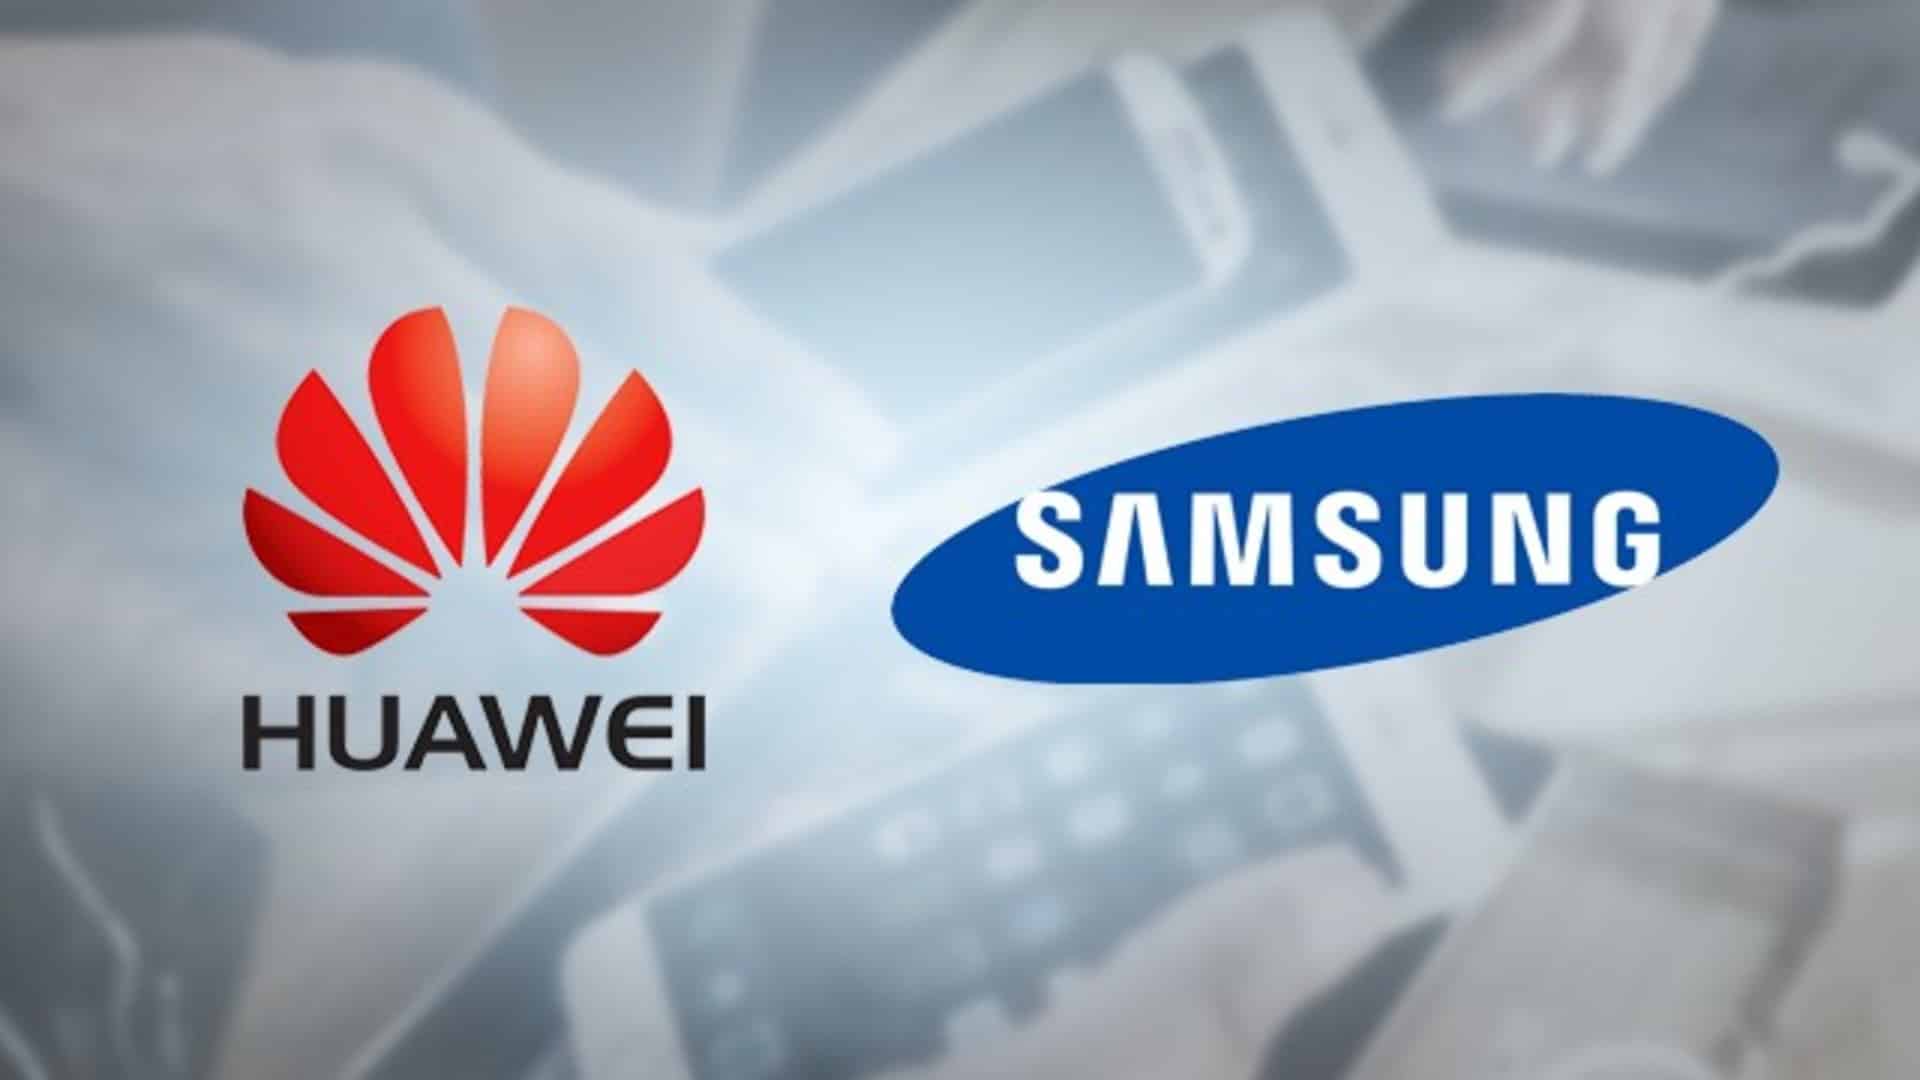 Huawei Samsung 2020